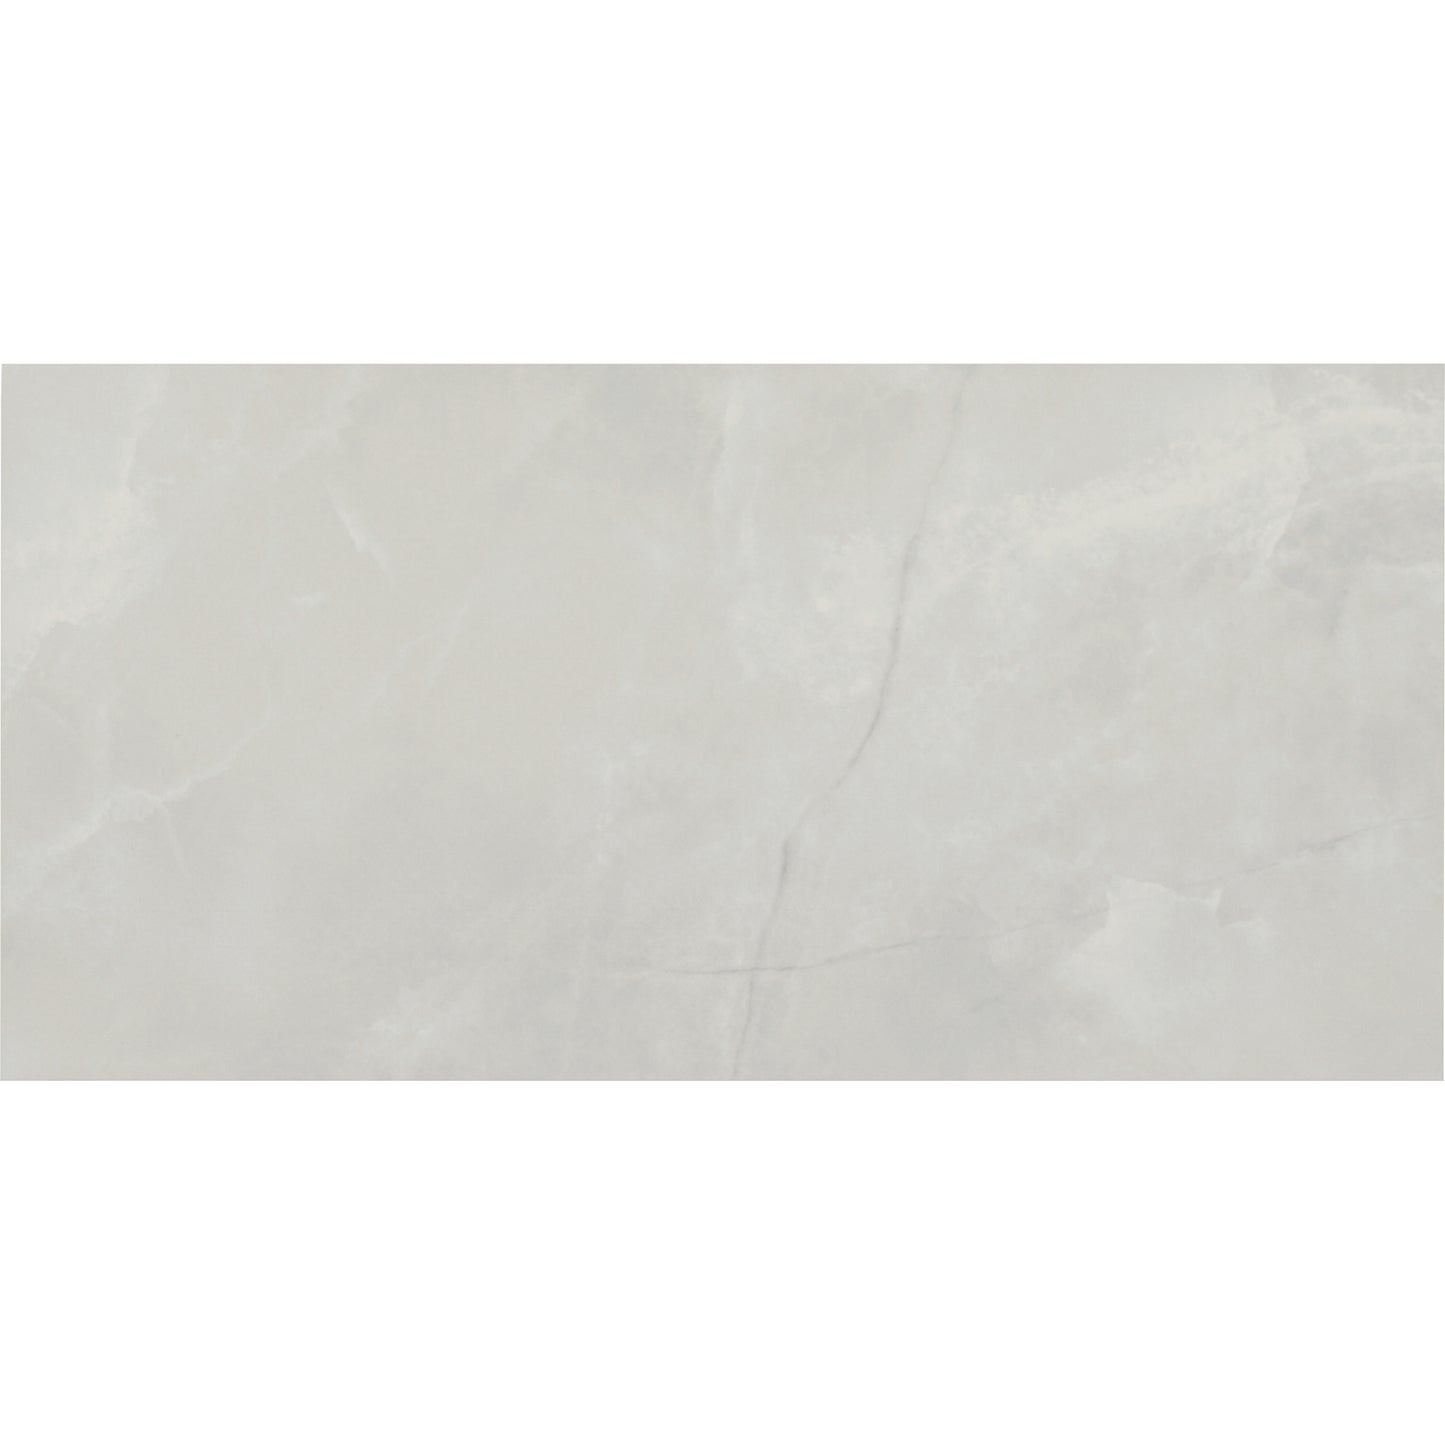 Onyx Grey Rectified Ceramic Marble High Gloss Wall Tiles 30cmx60cm